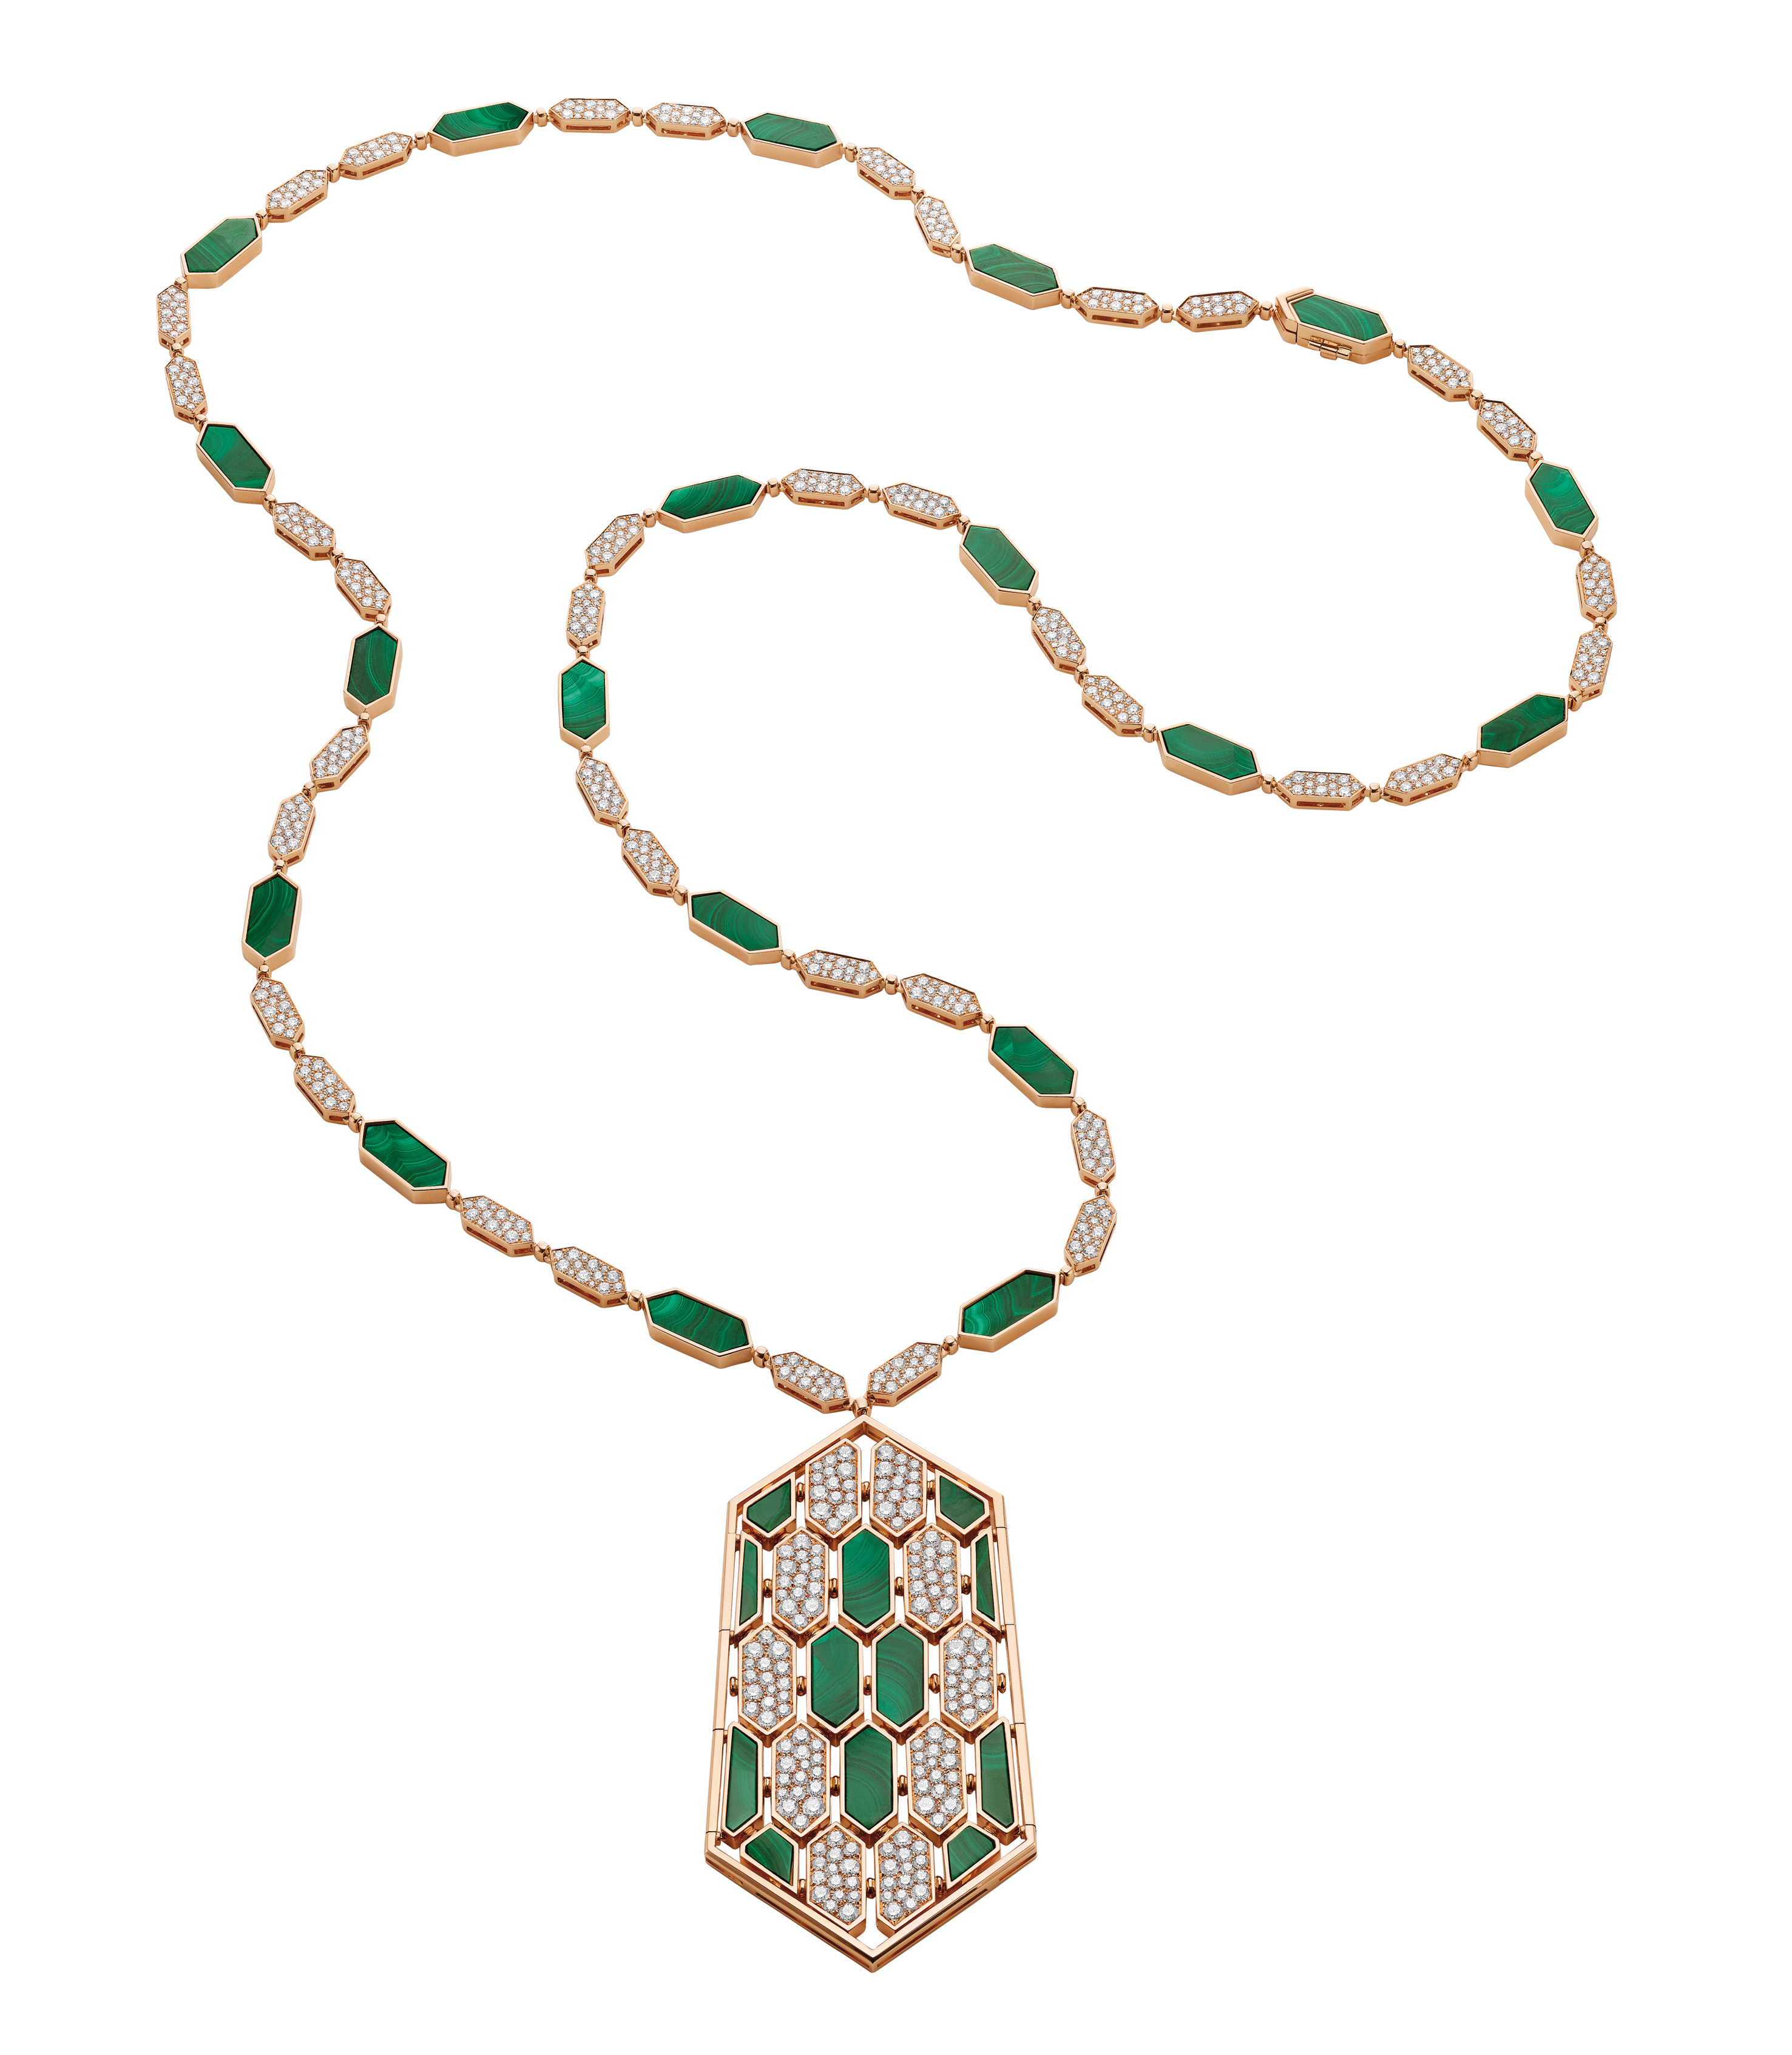 bulgari snake necklace cost